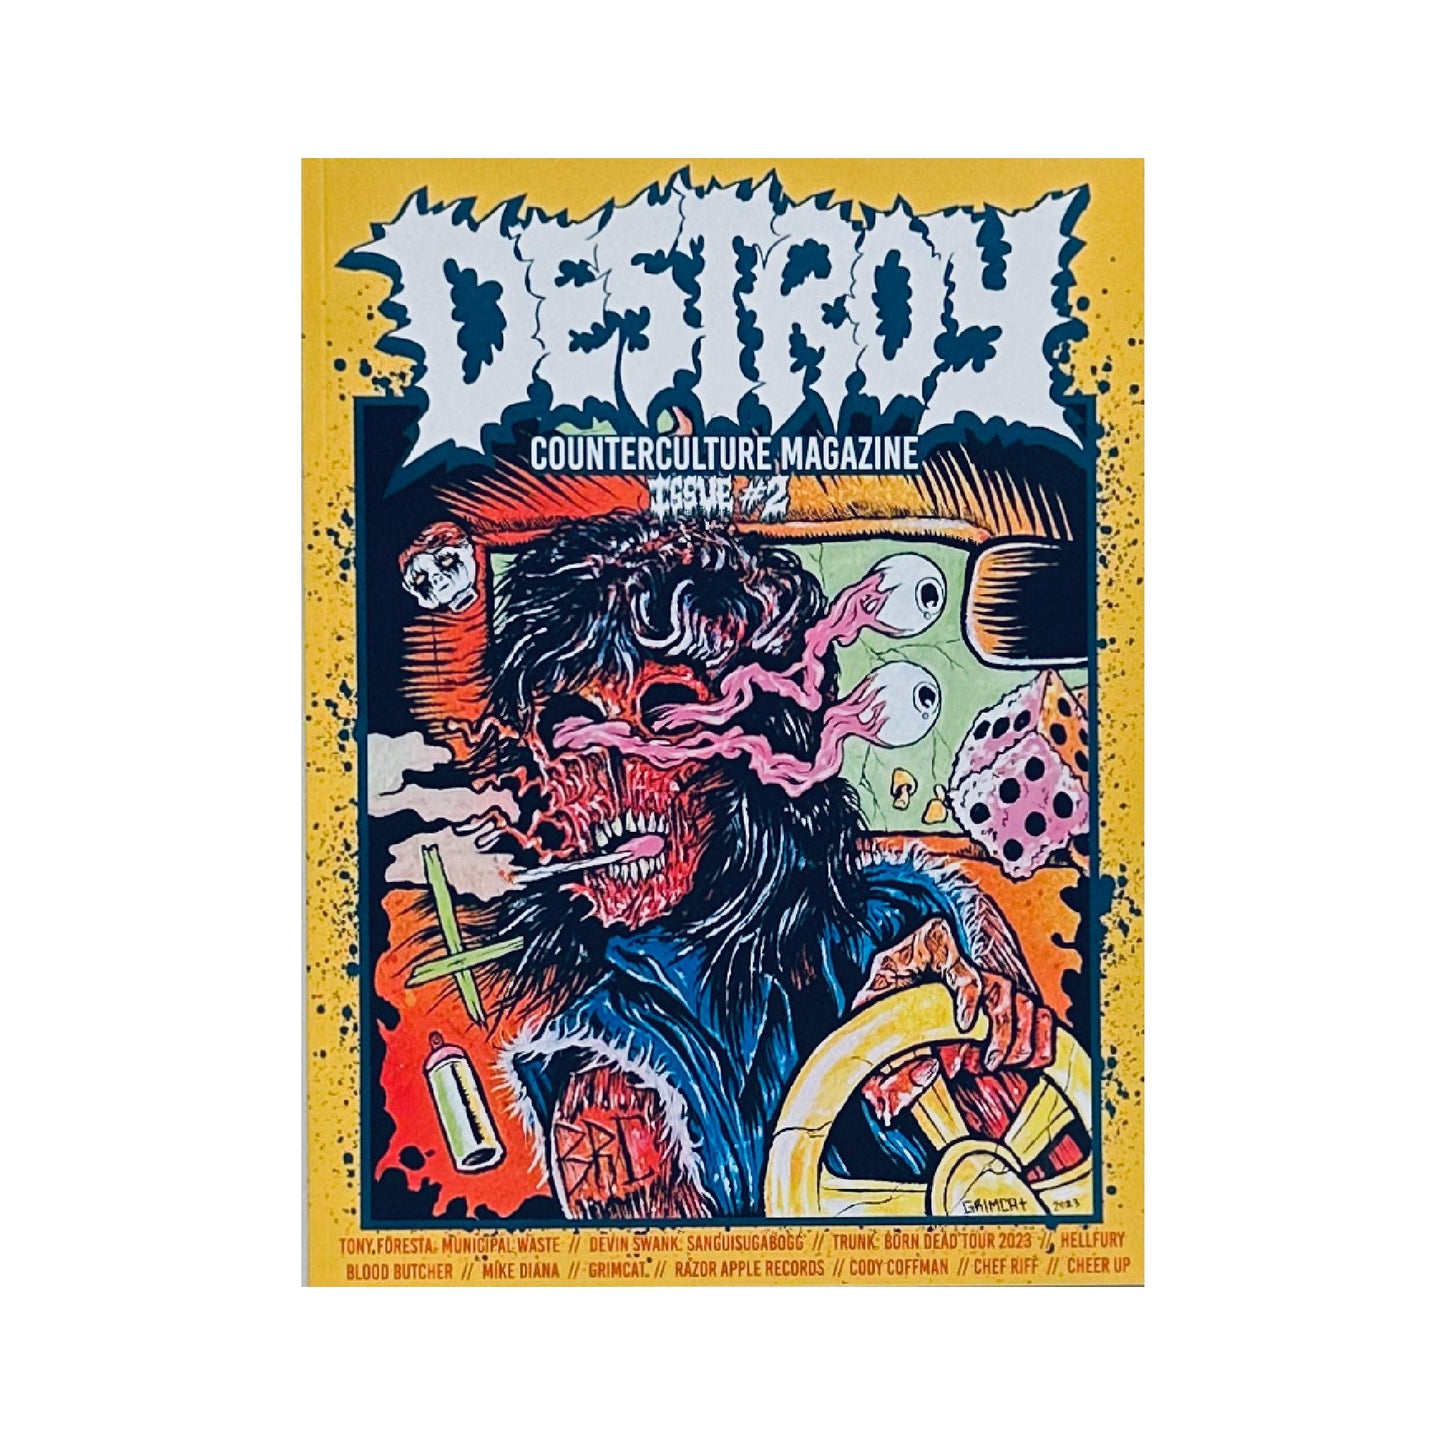 Destroy Magazine Issue #1 and #2 bundle